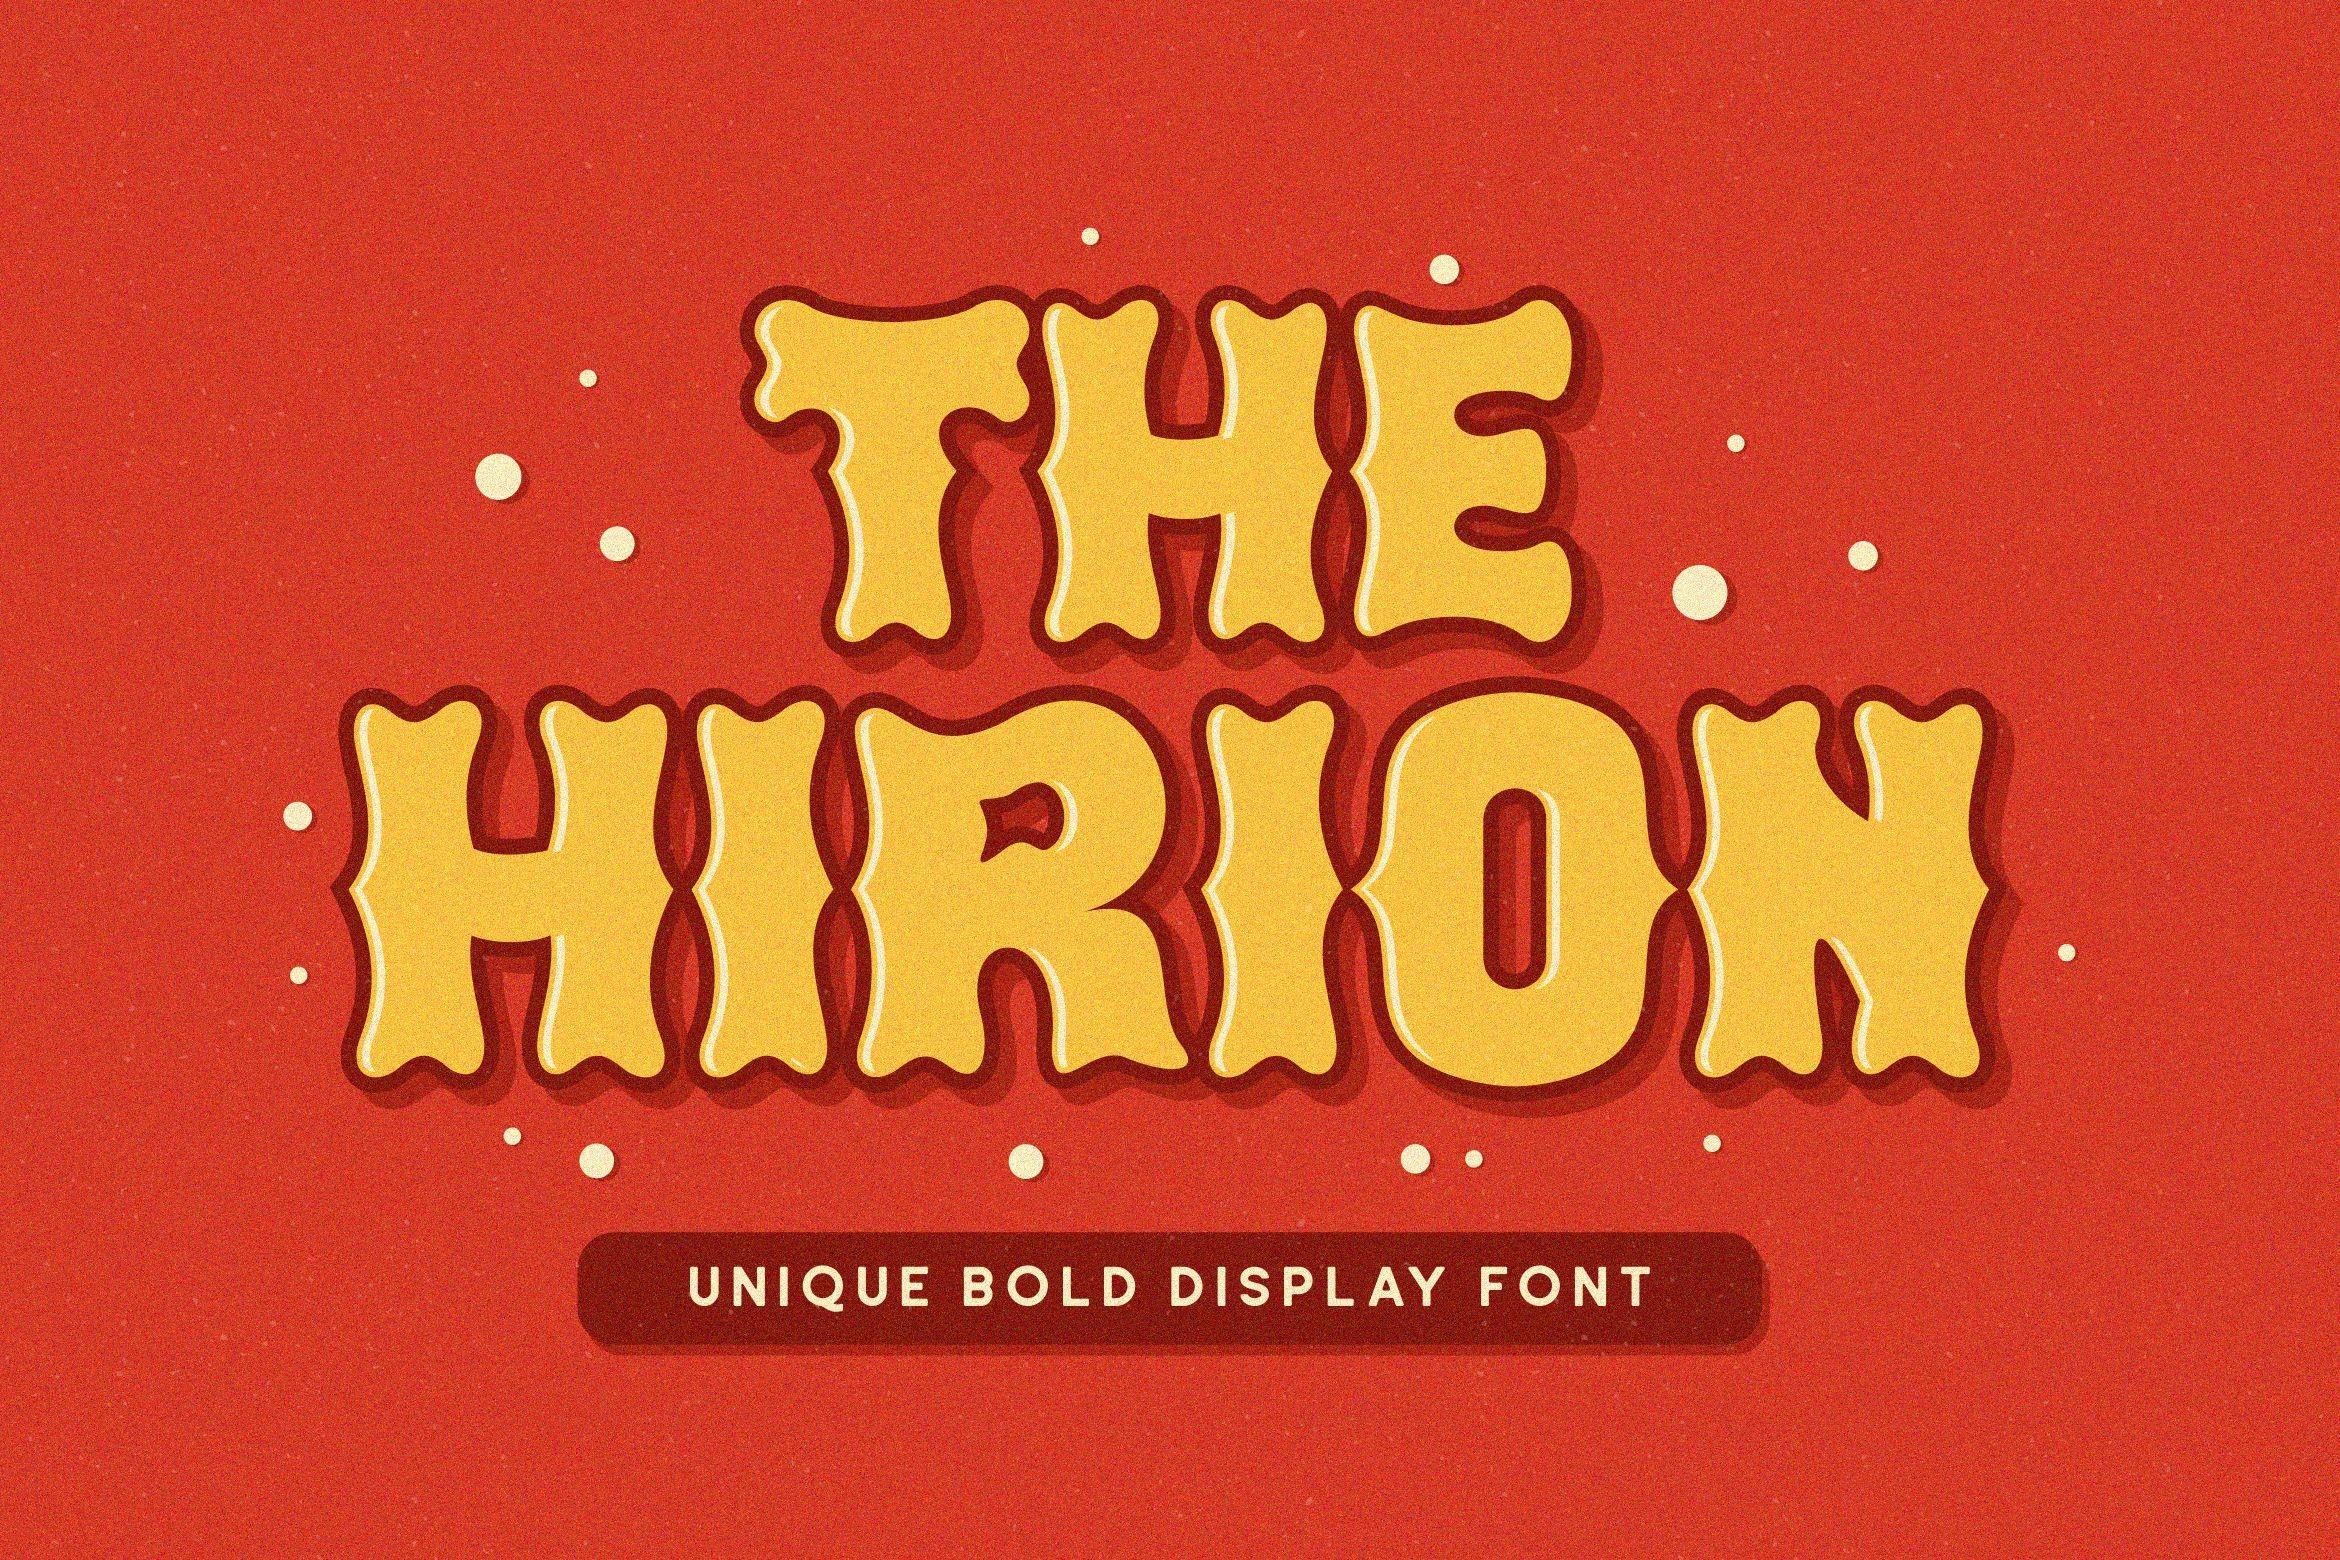 Hirion Font